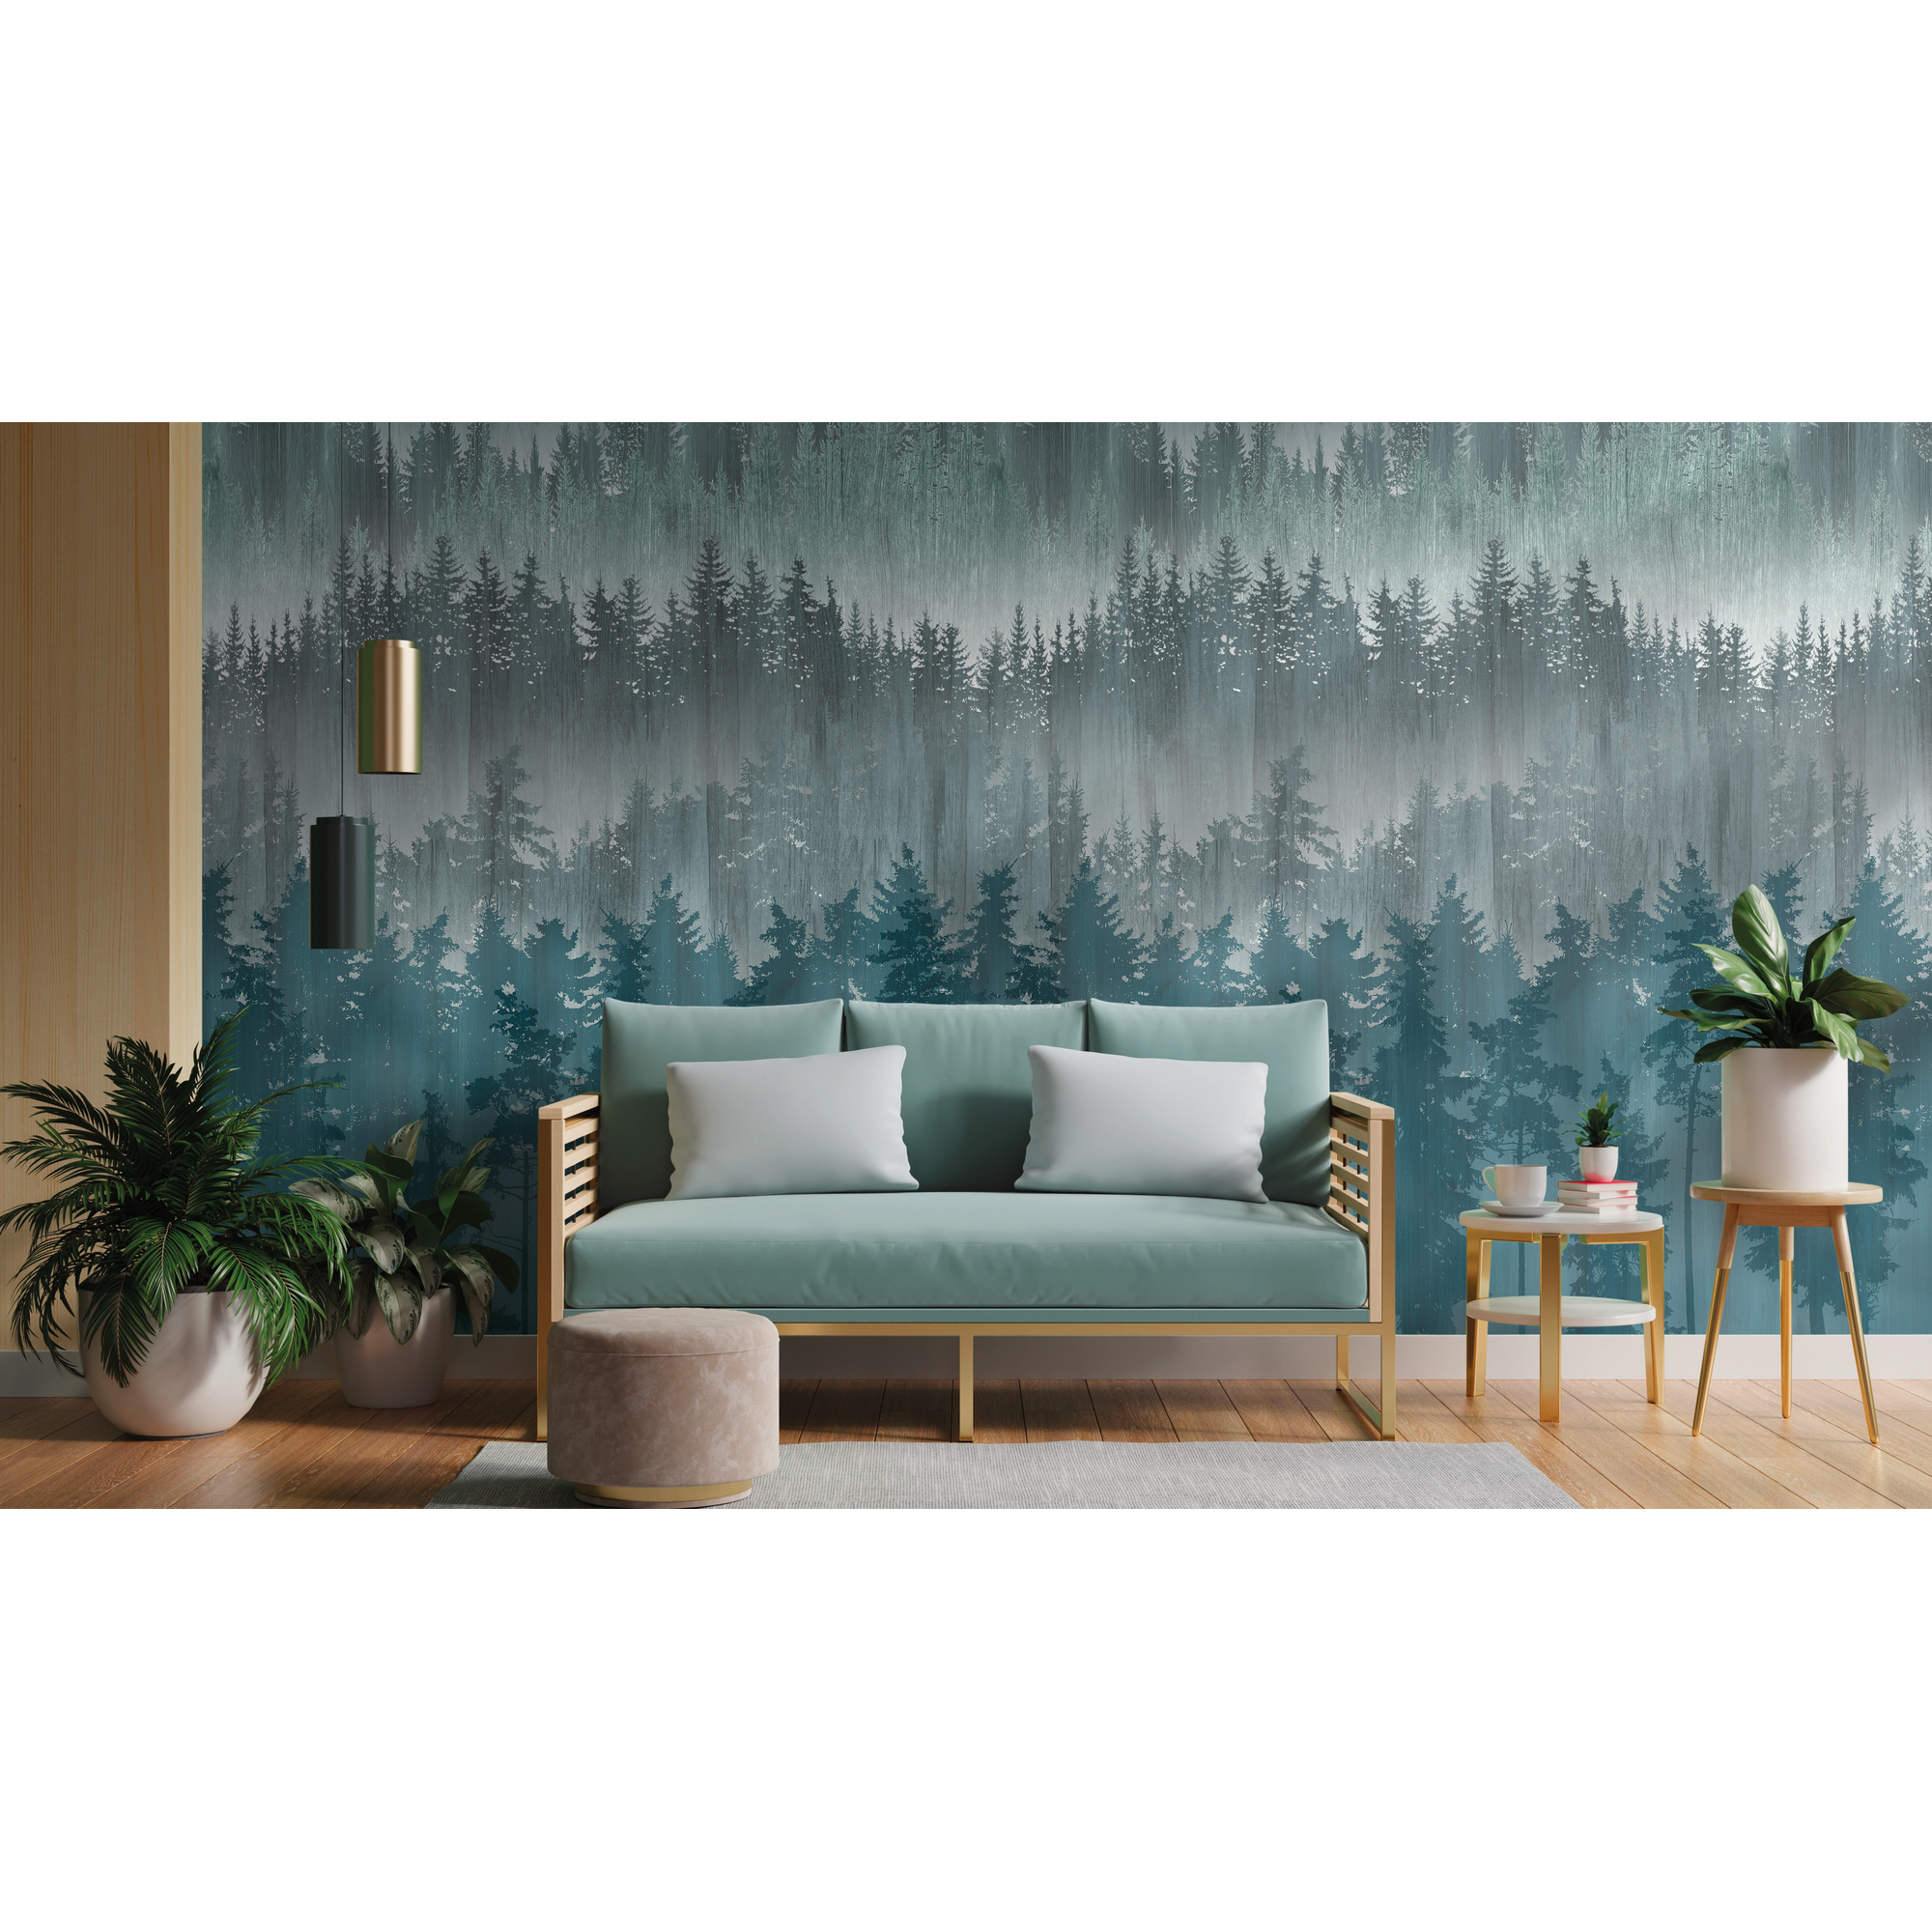 Vliestapete 'The Wall II' Wald aquarell blau 3-teilig 159 x 280 cm + product picture